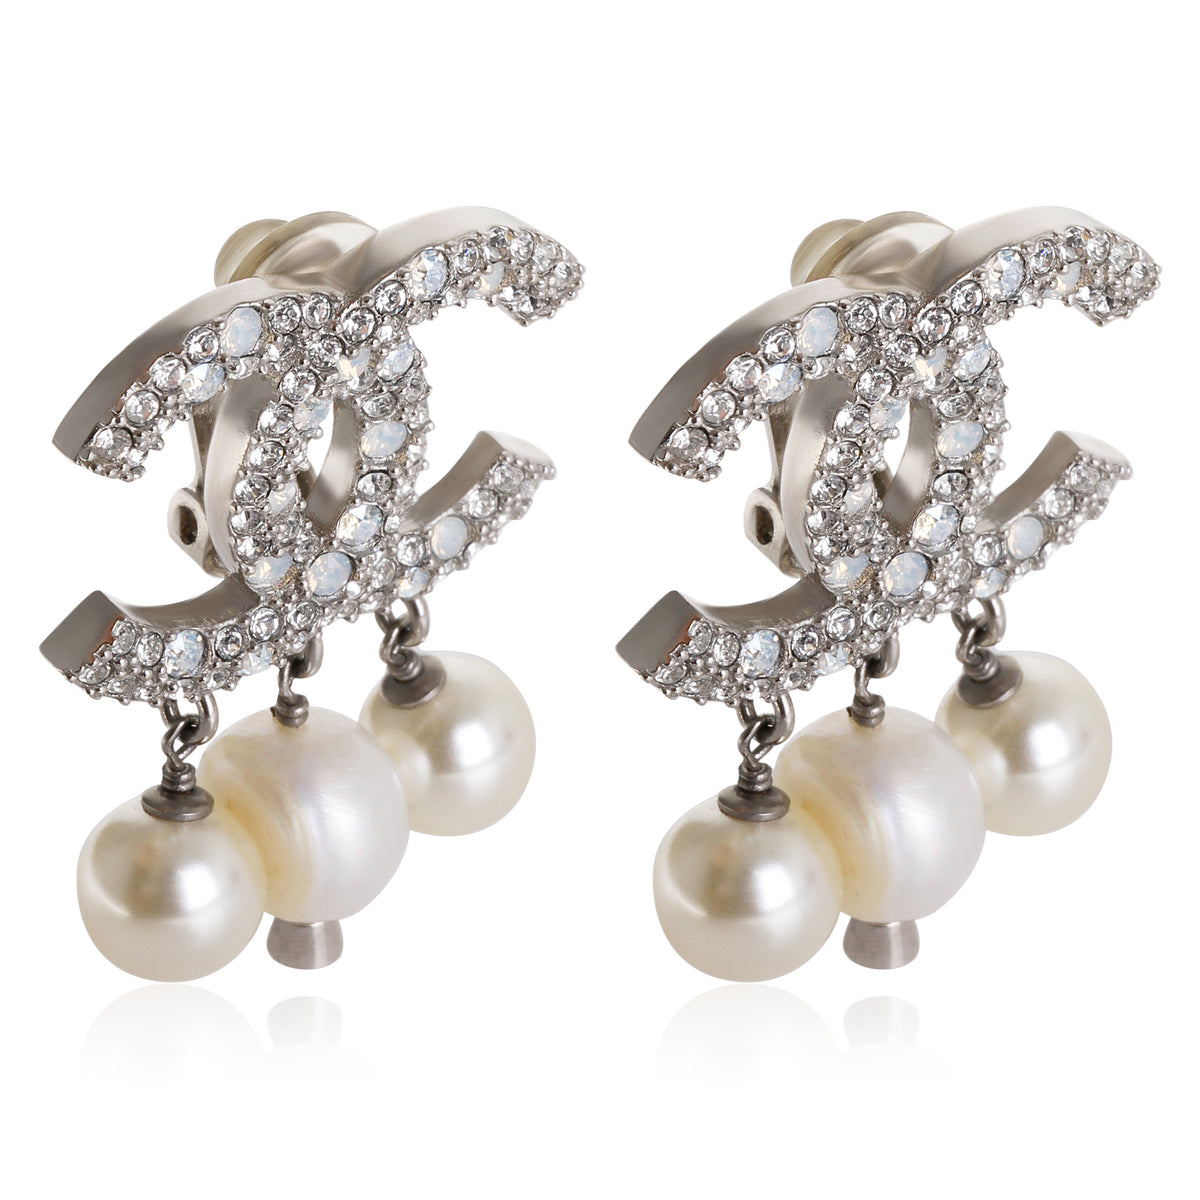 Carolina Herrera Ch Crystal Faux Pearl Gold Tone Earrings - 2 Pieces